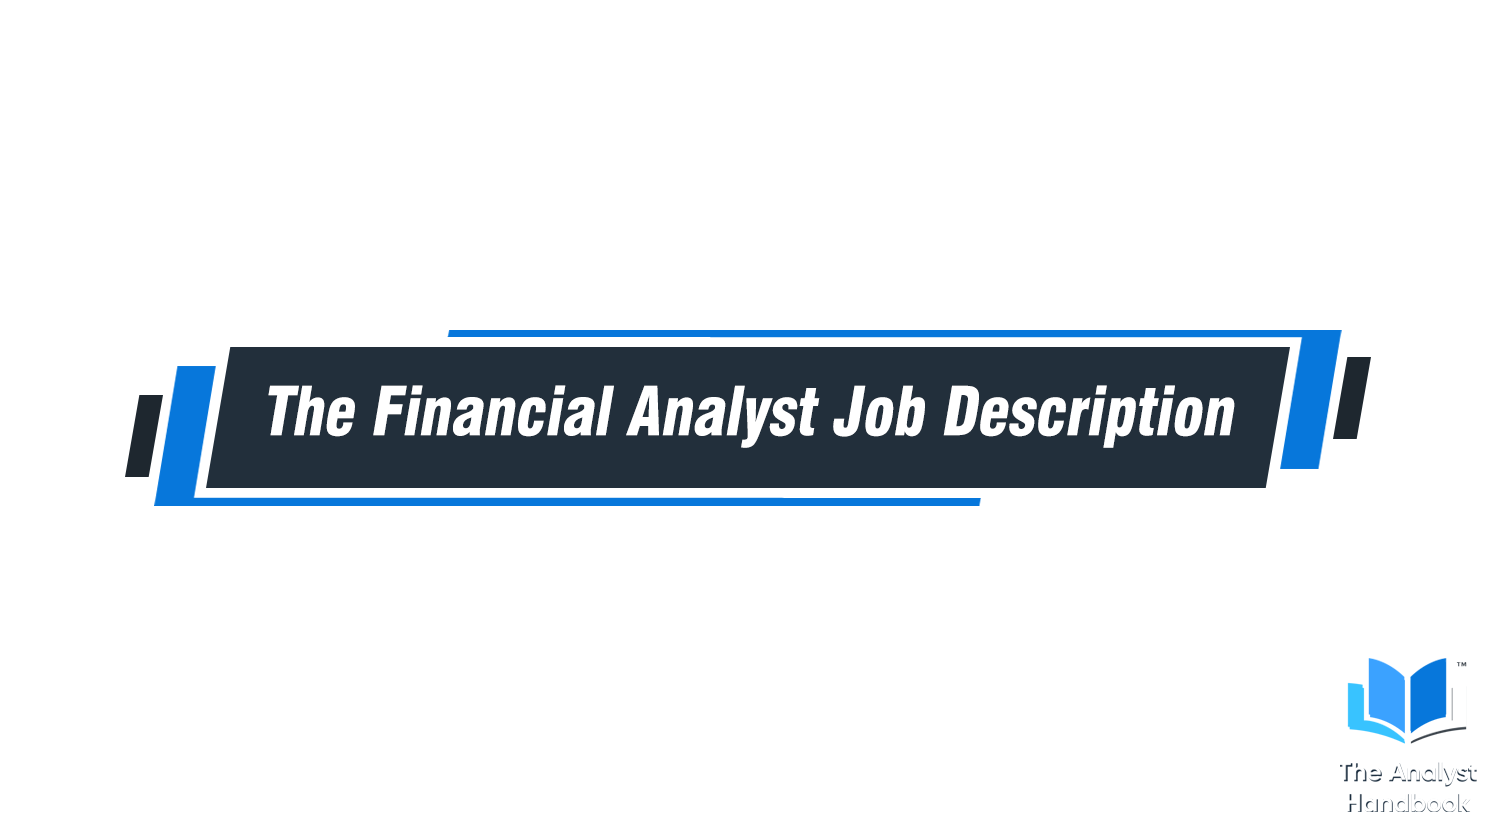 The Financial Analyst Job Description